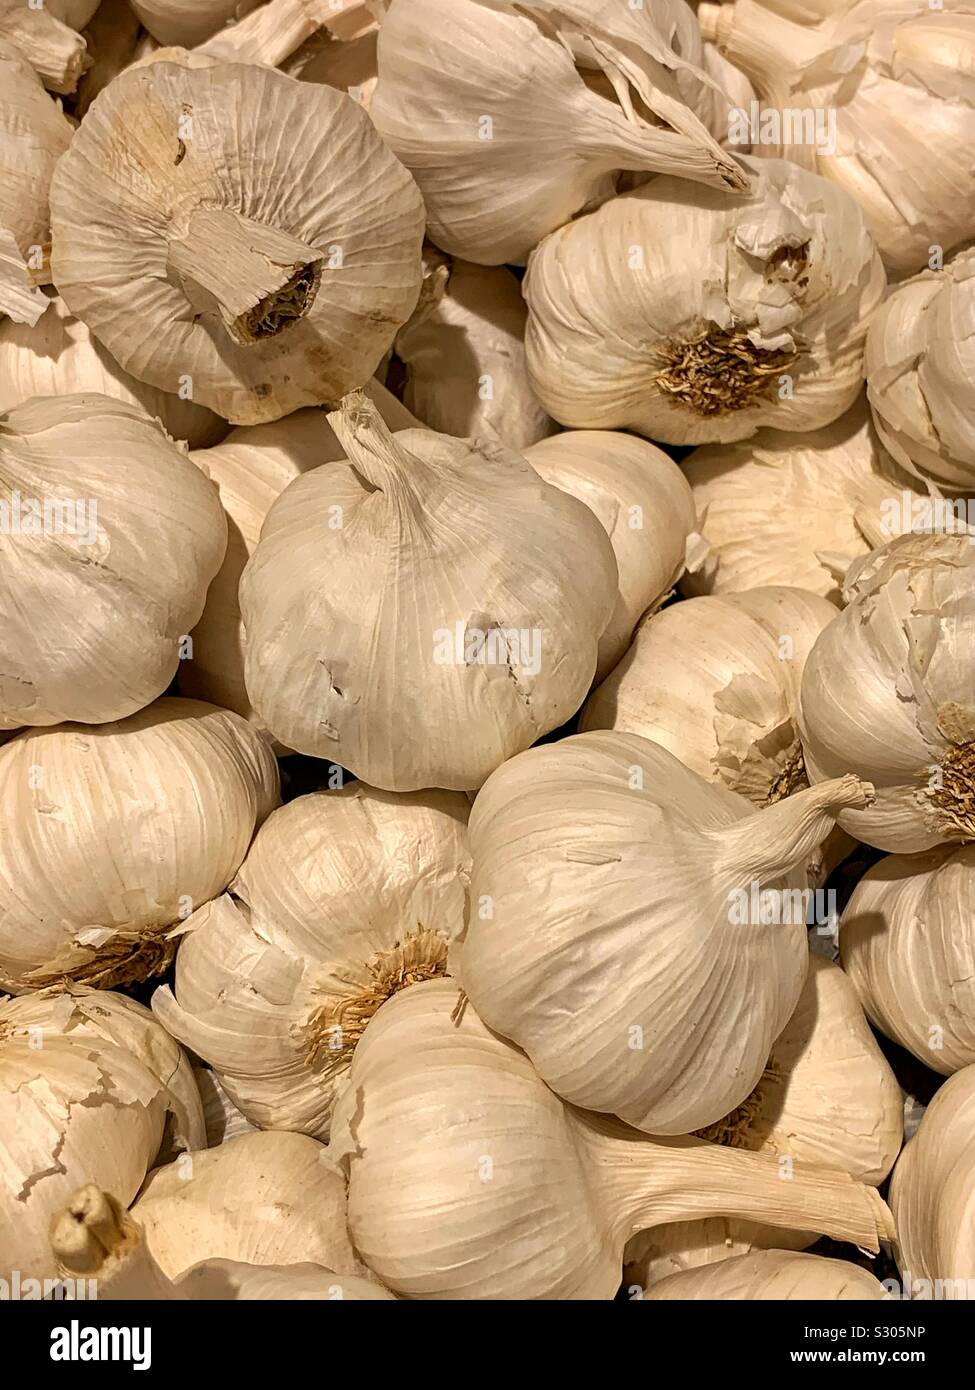 Many fresh aromatic flavorful garlic bulbs Stock Photo